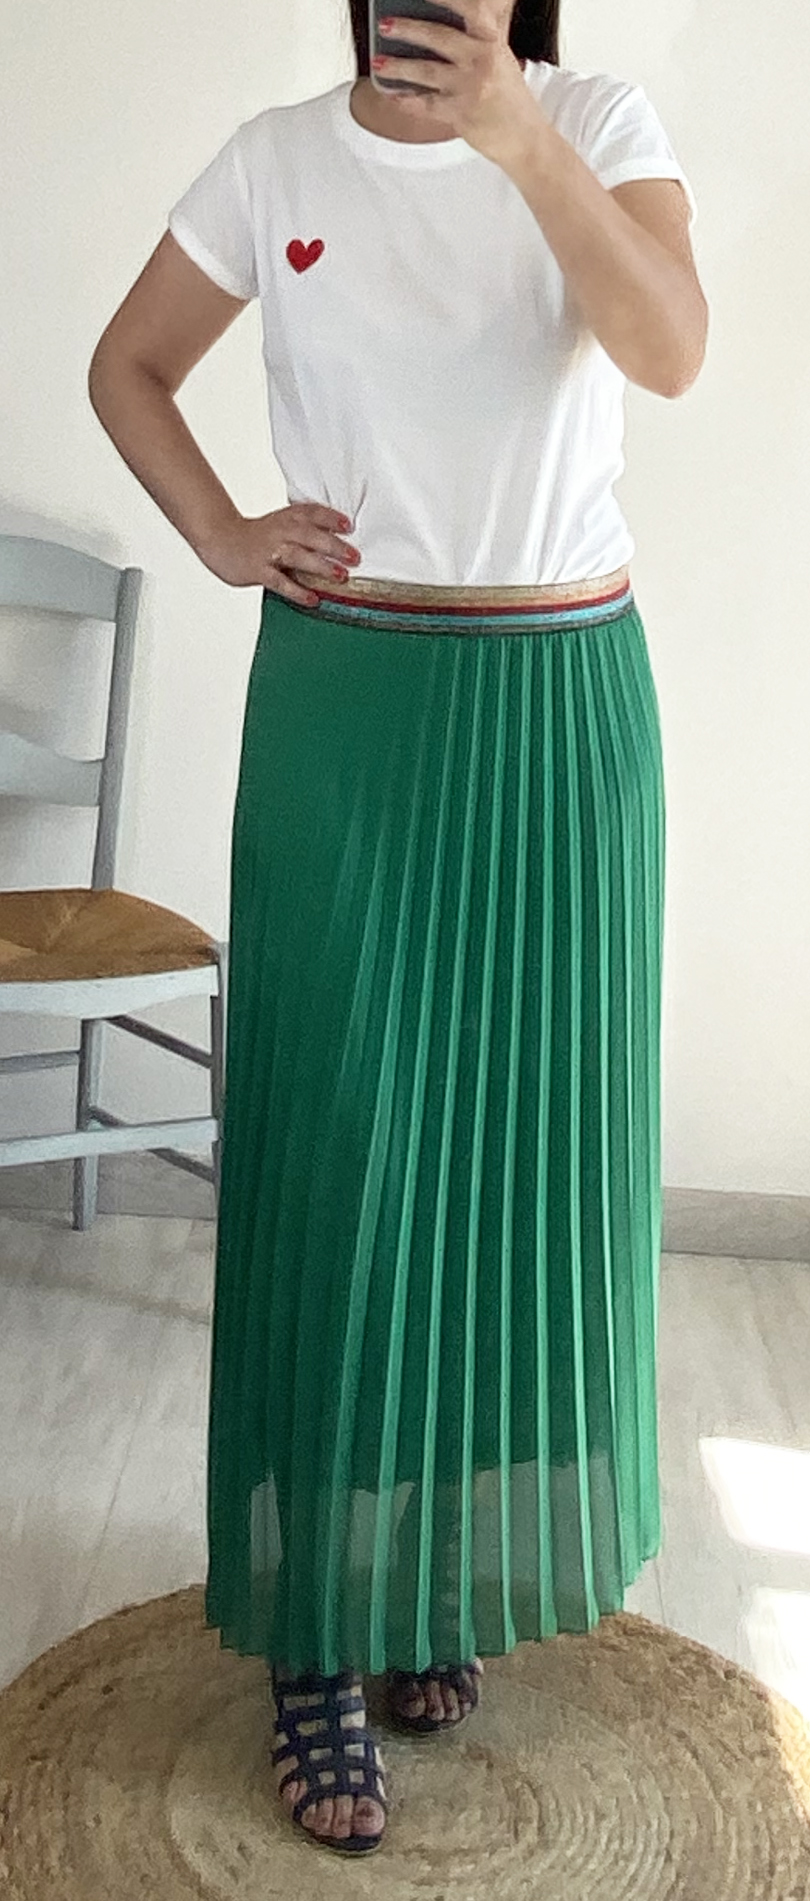 jupe plissée verte